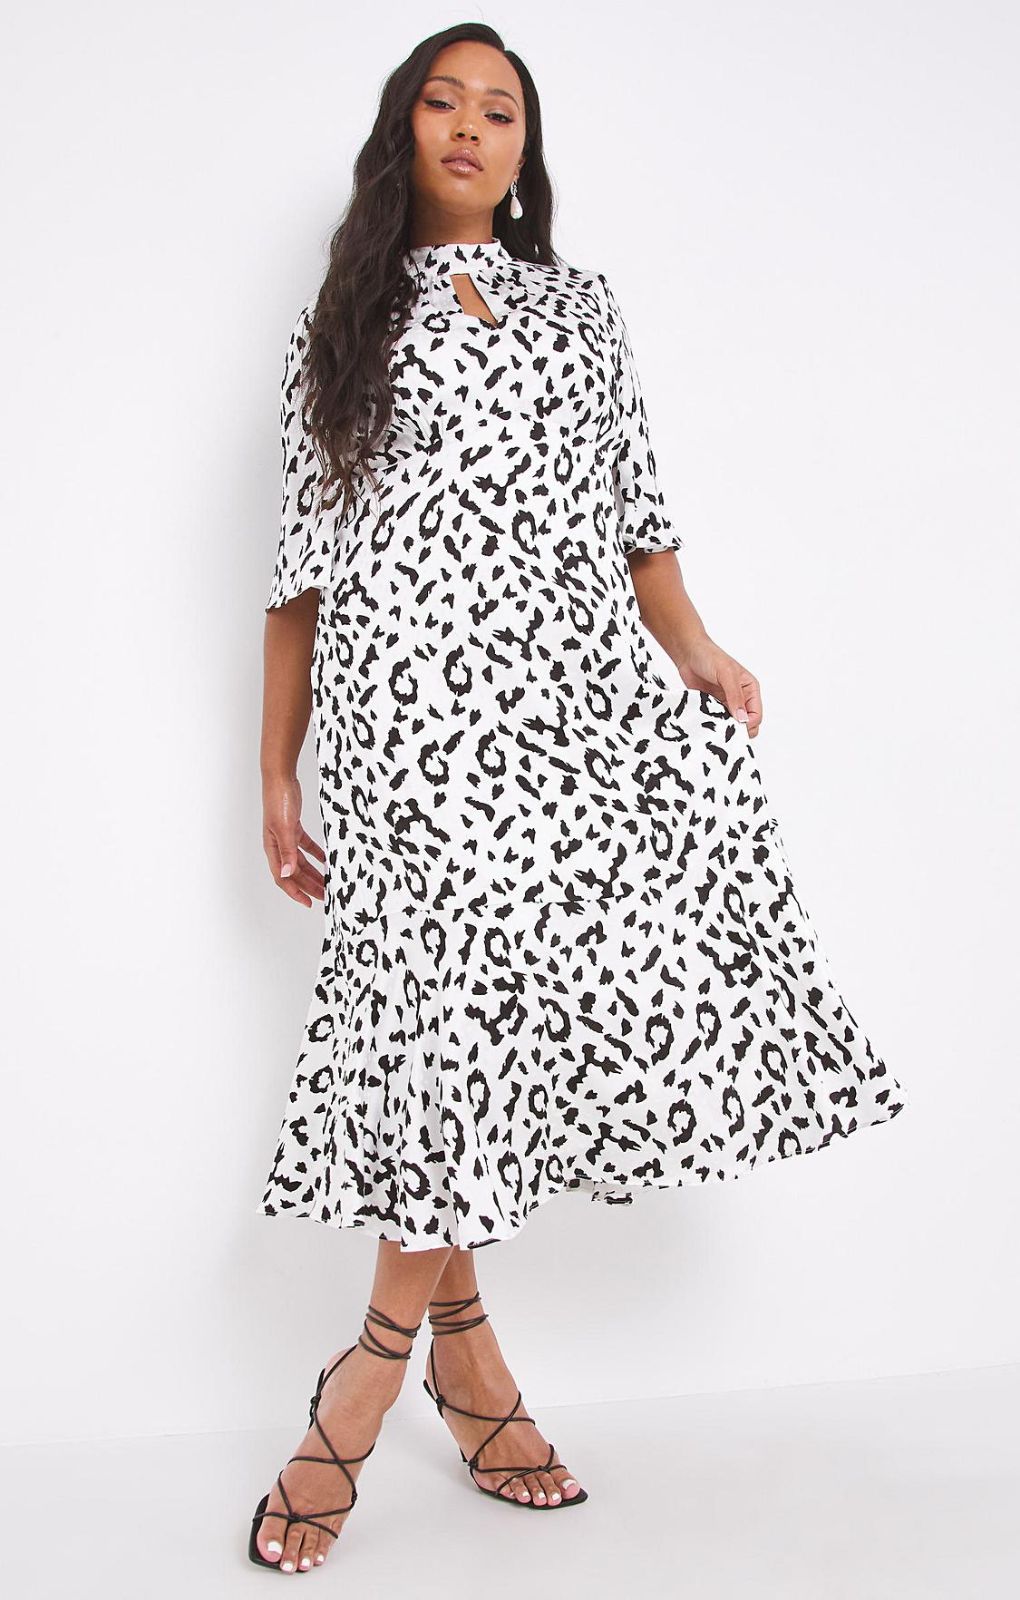 Simply Be Mono Print Jacquard Dress product image